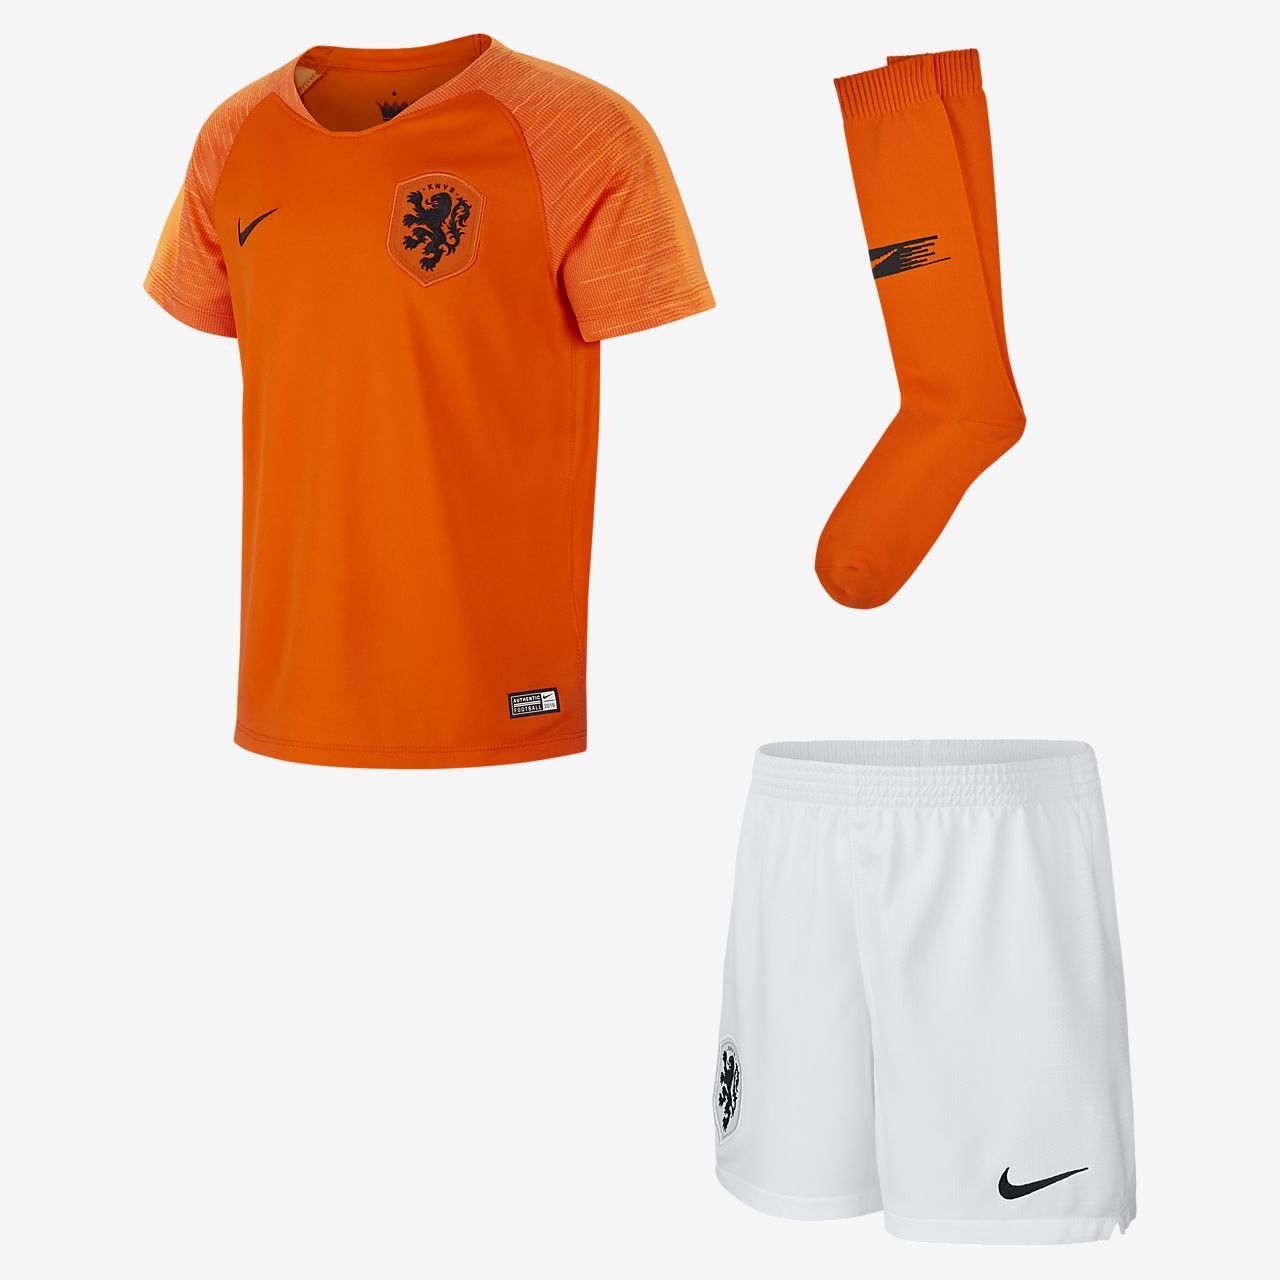 2018 netherlands jersey